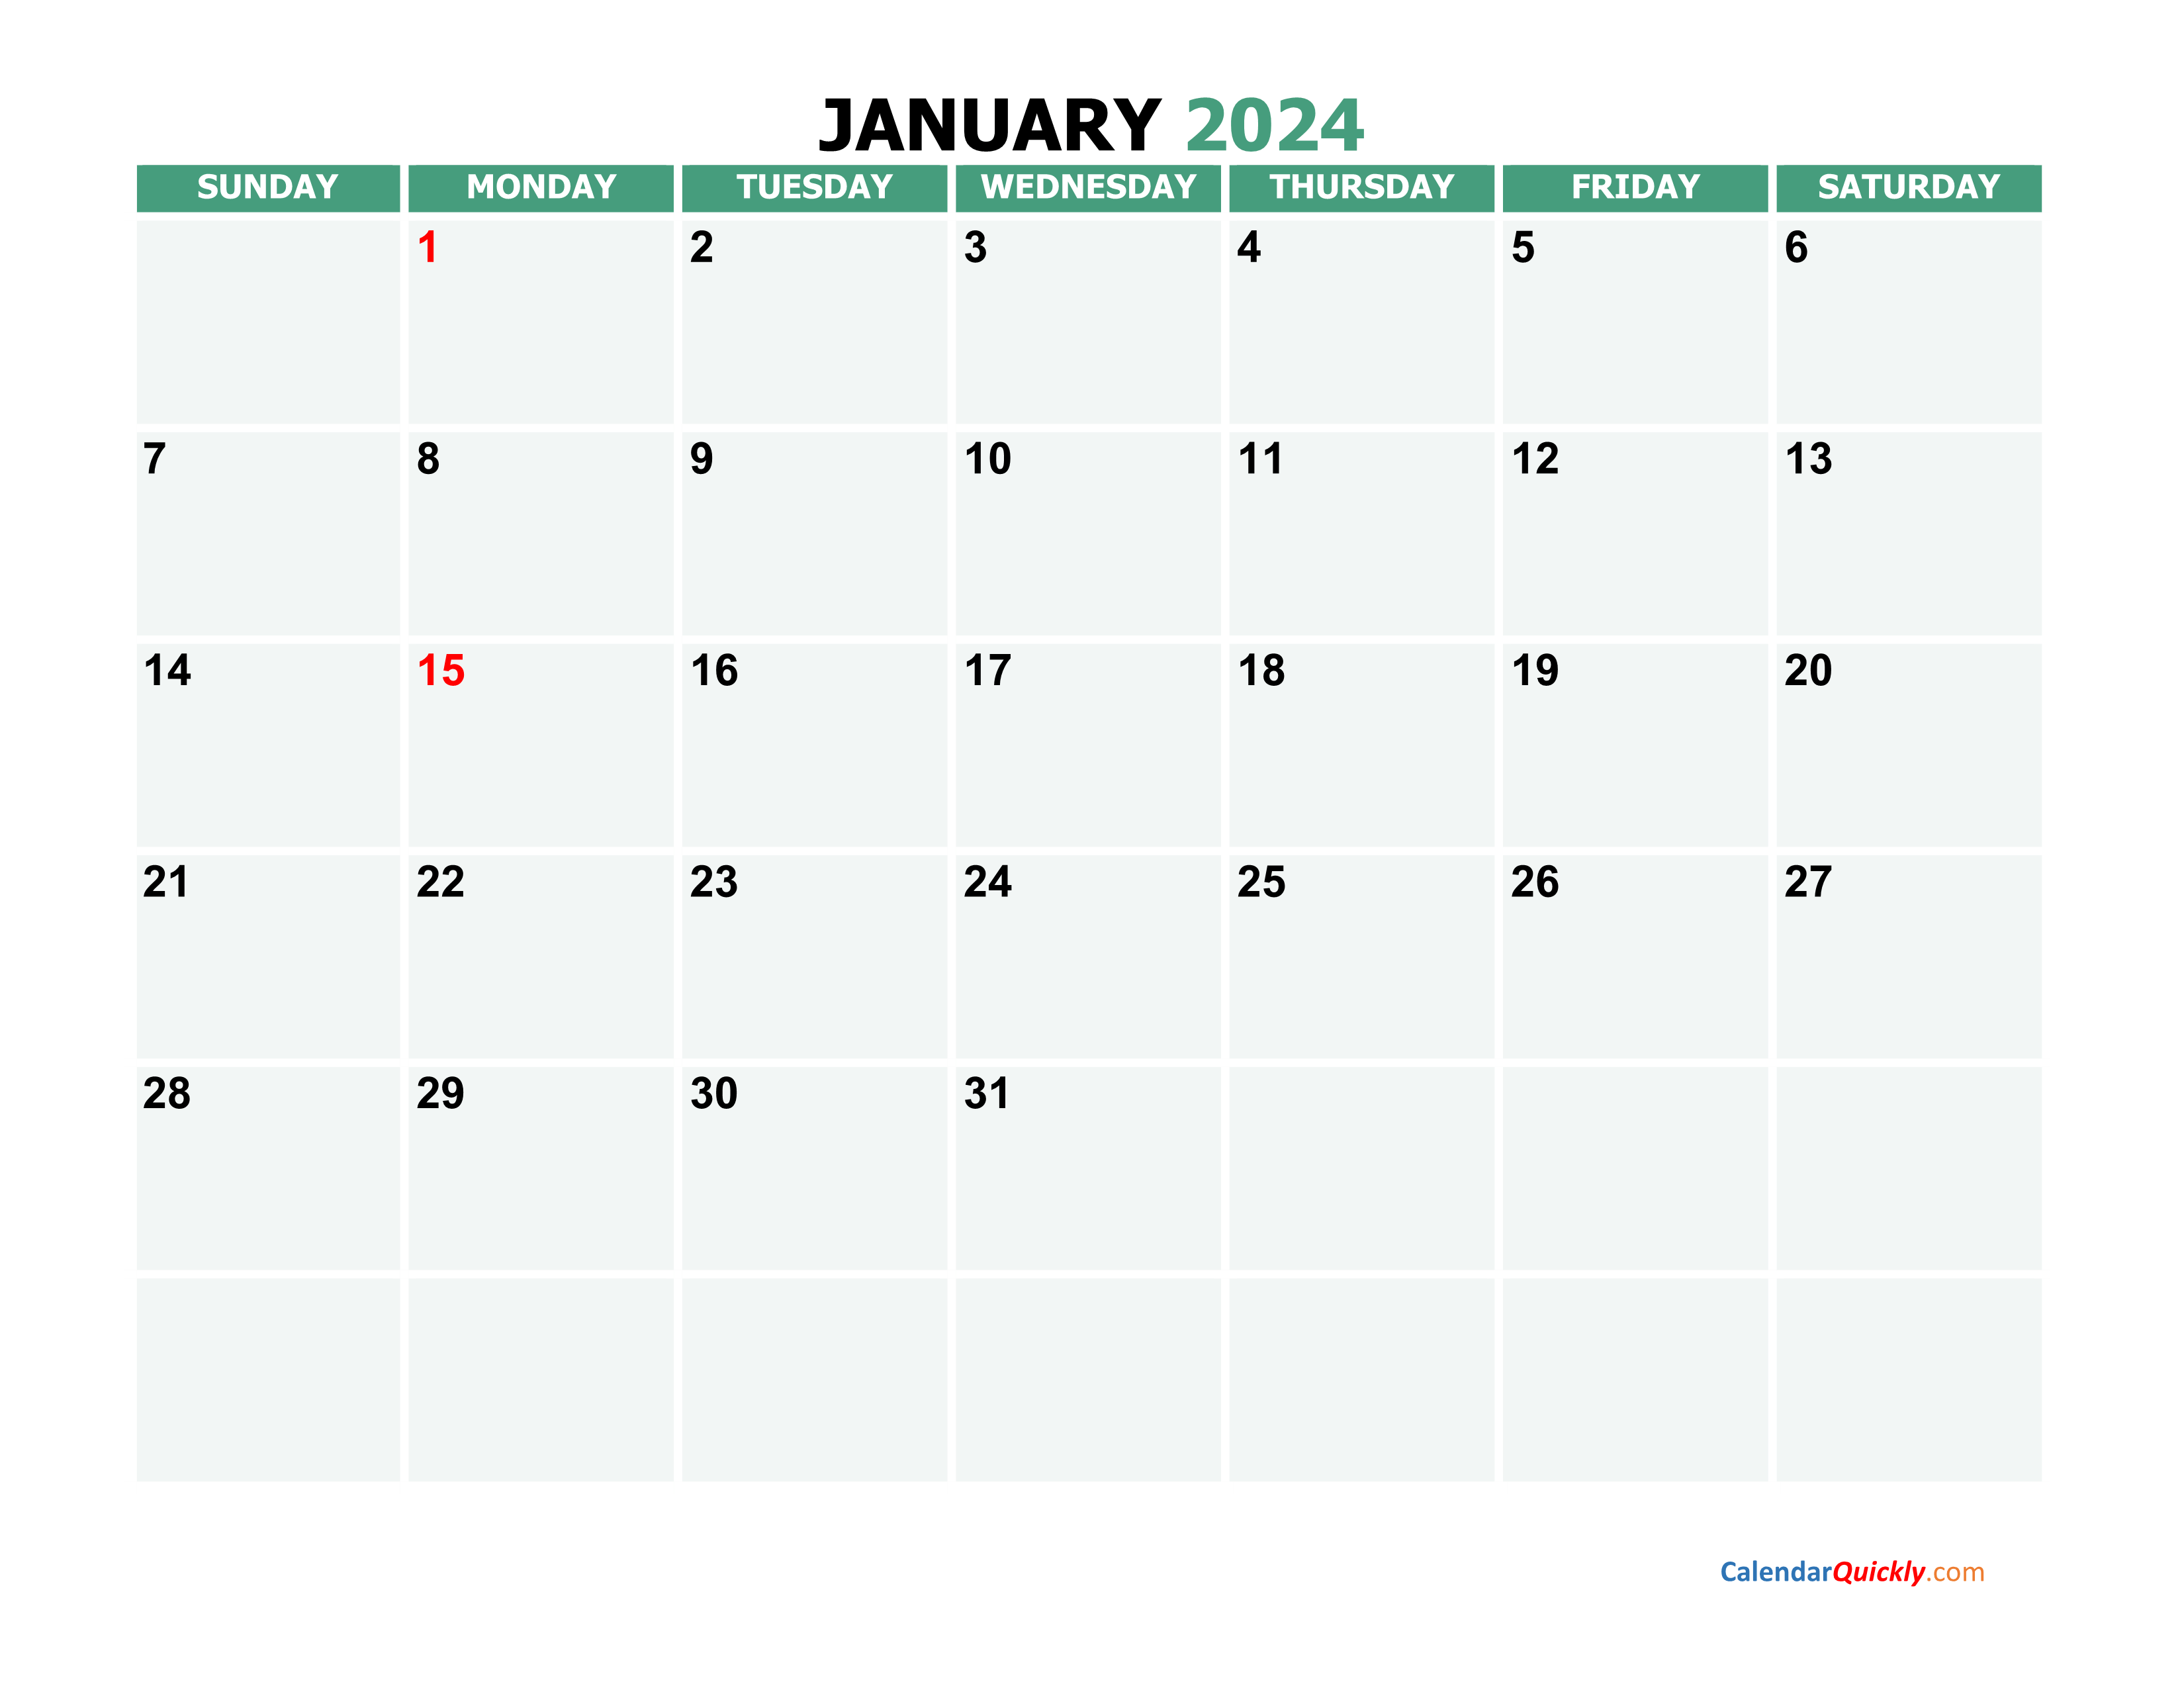 January 2024 Calendars | Calendar Quickly